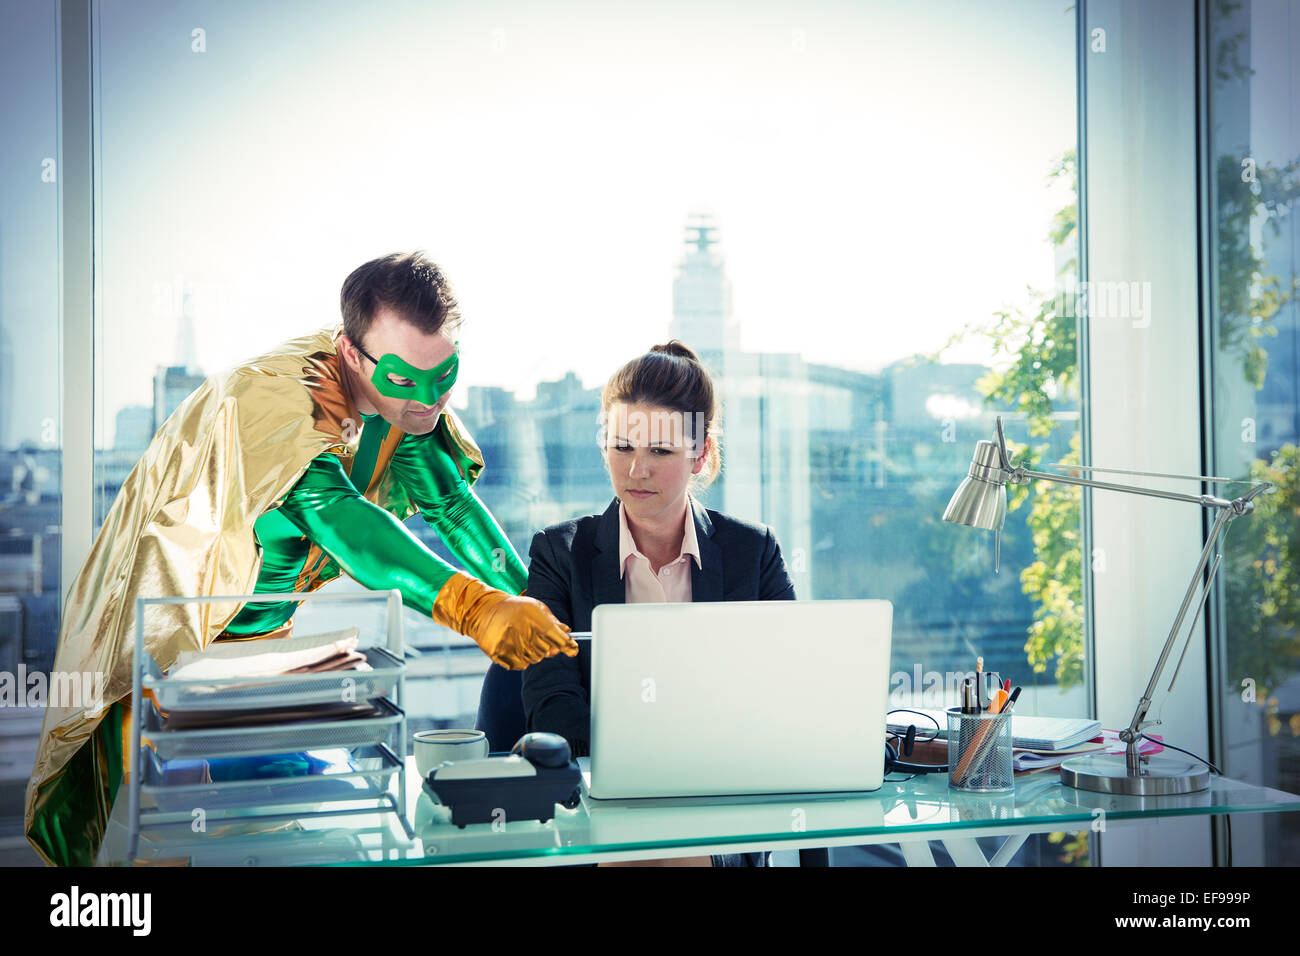 Superhero helping businesswoman working at office desk Stock Photo